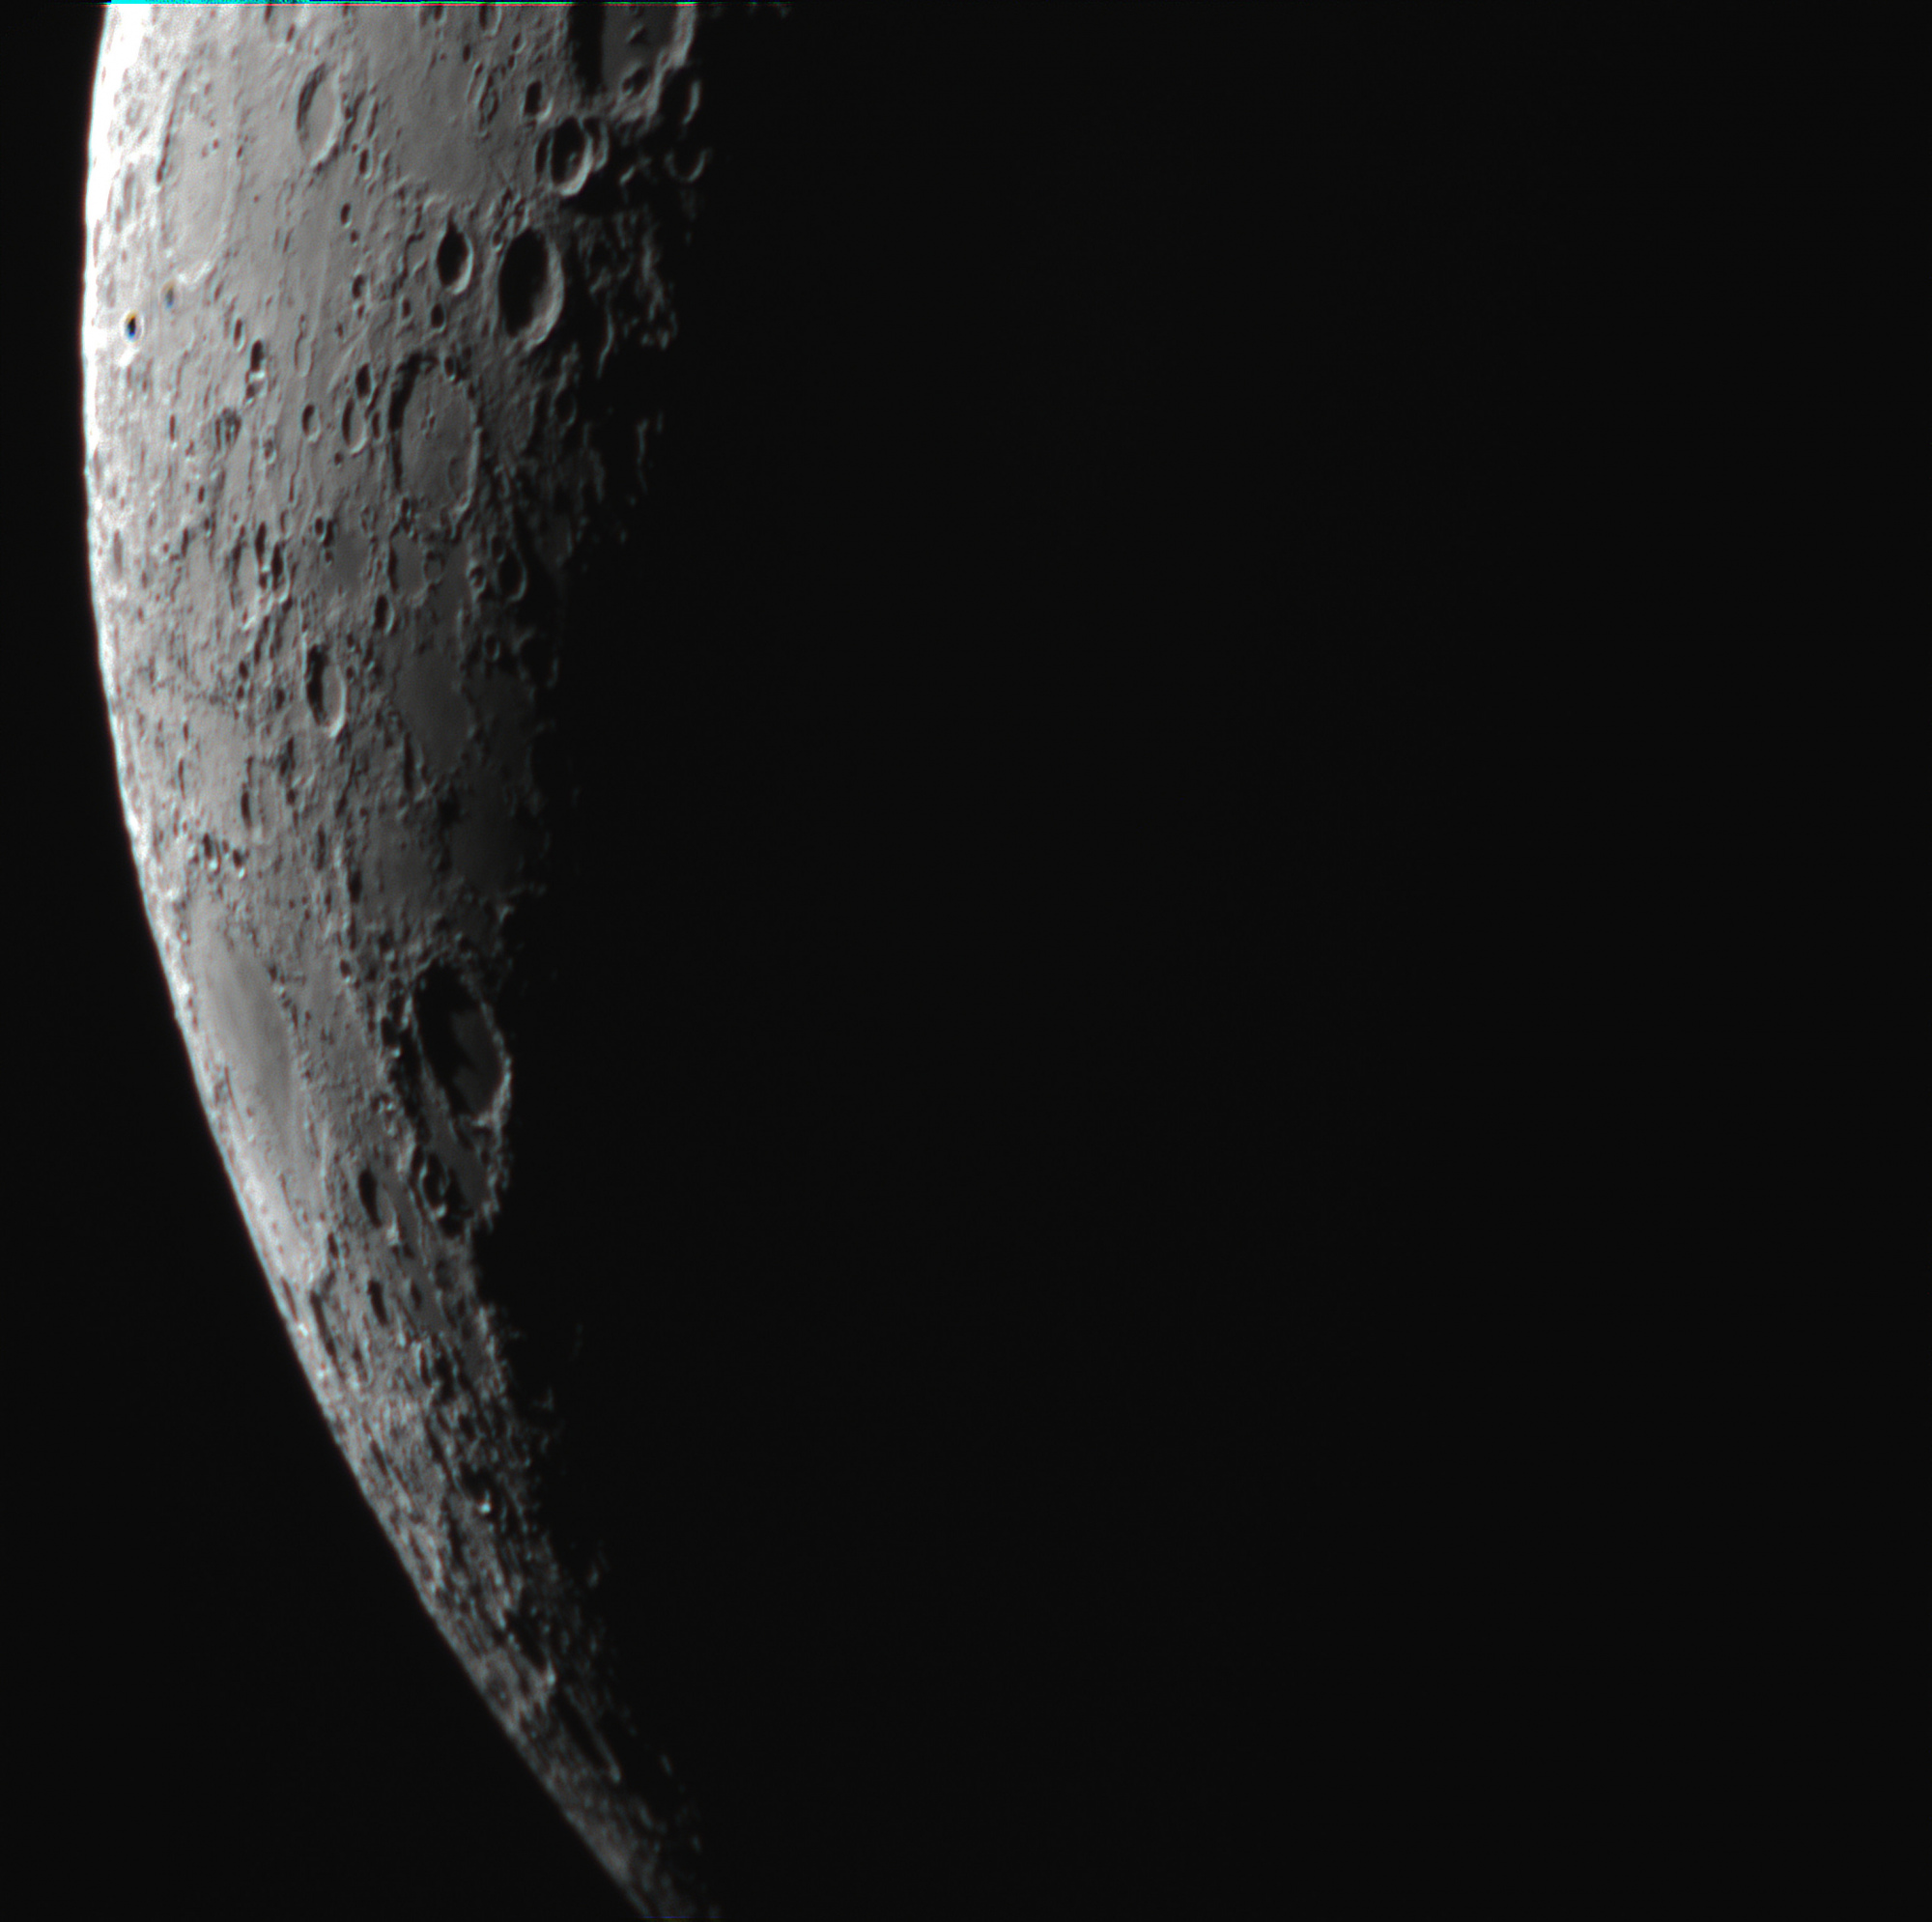 2022-02-04-1836_3-Moon_astrosurface_dxo.thumb.jpg.752c7fbc4105f8cfbd851fcbbad6bb8f.jpg